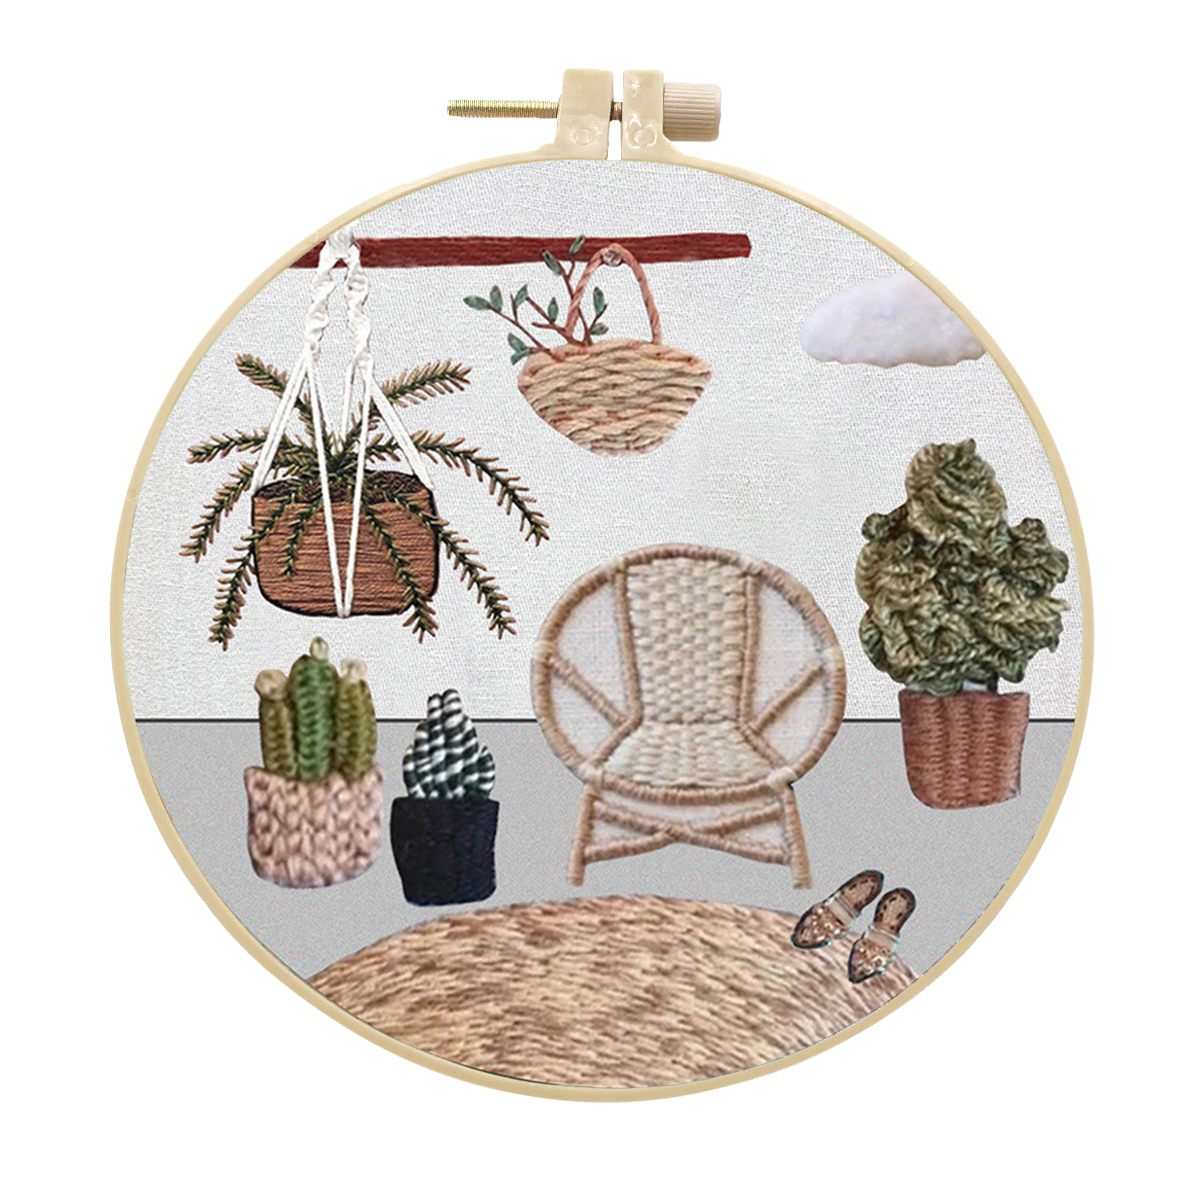 Handmade Embroidery Kit Cross stitch kit for Adult Beginner - Romantic room Pattern